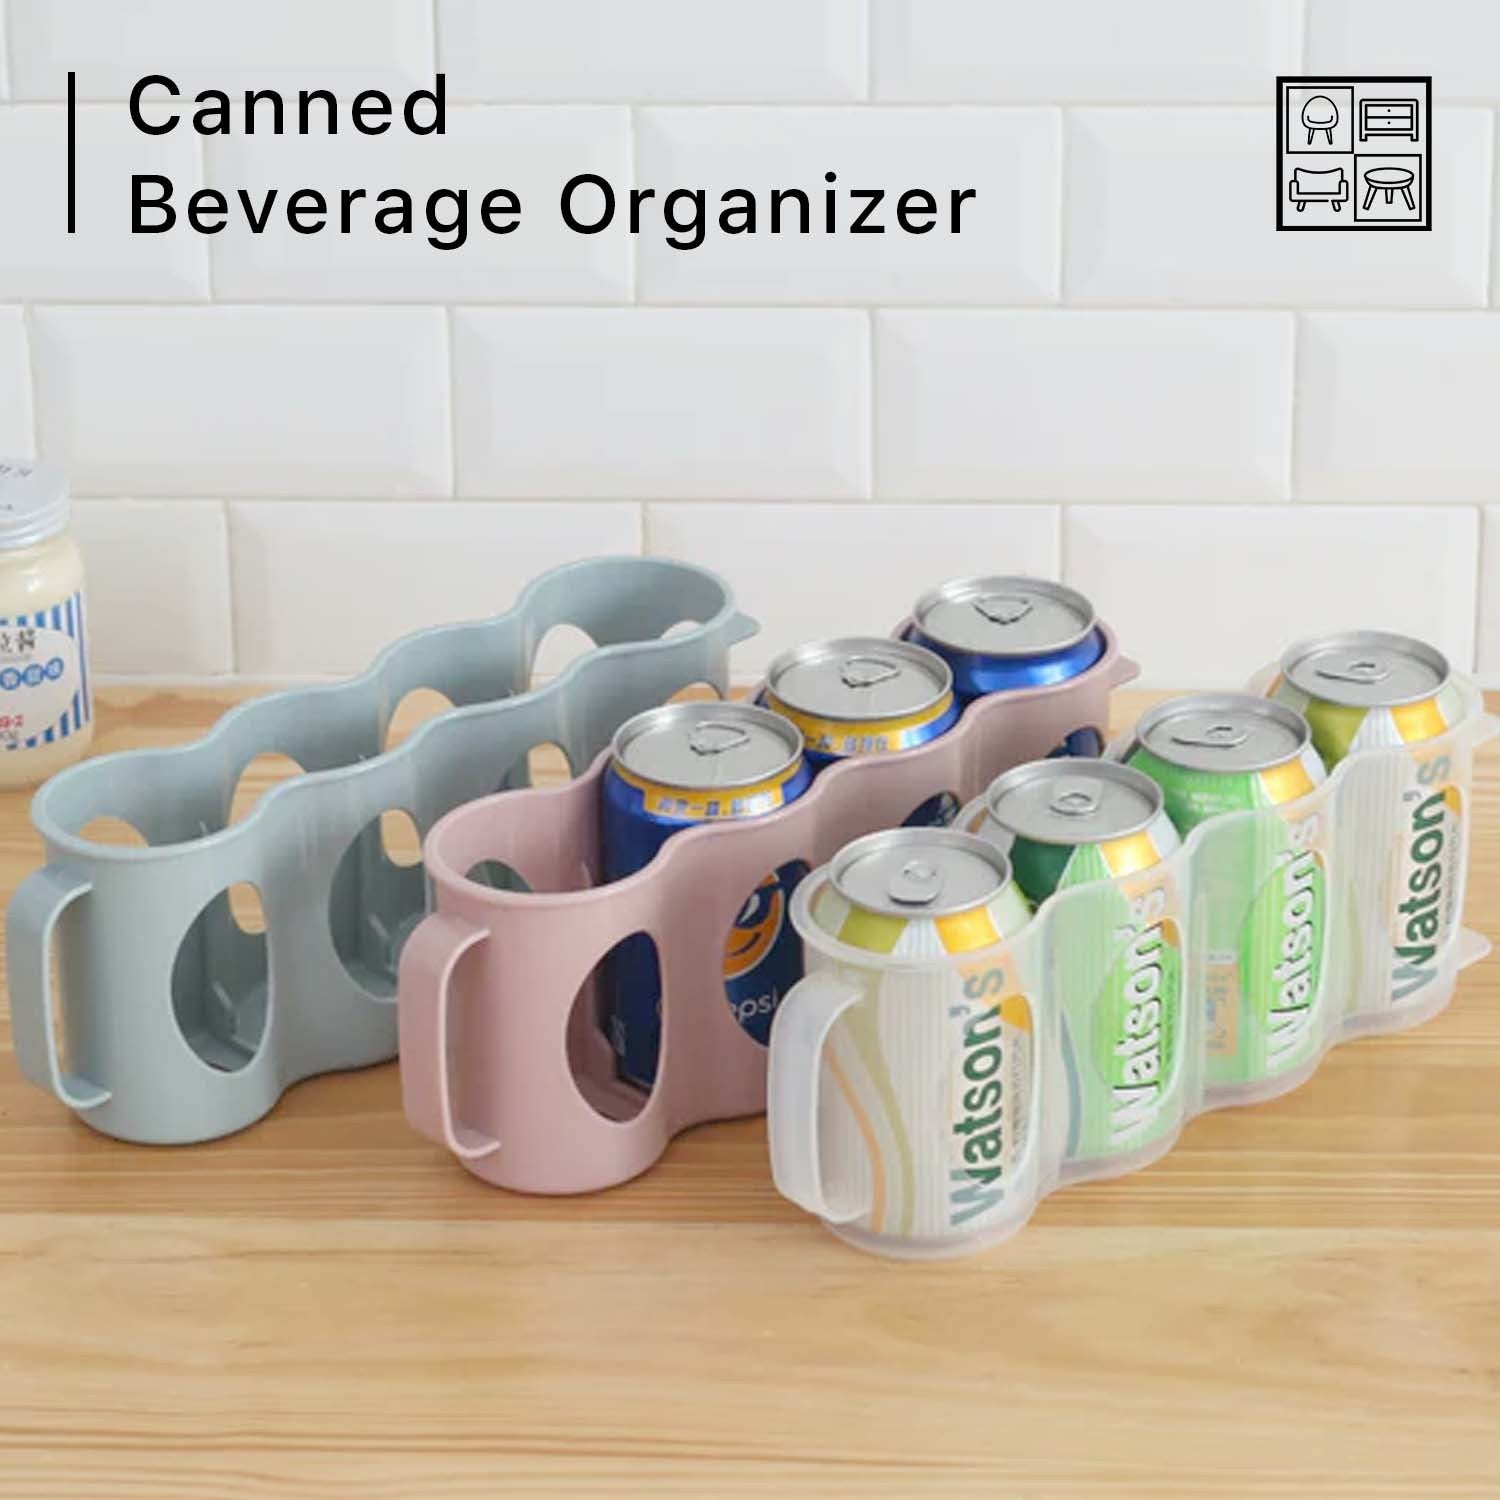 Canned Beverage Organizer